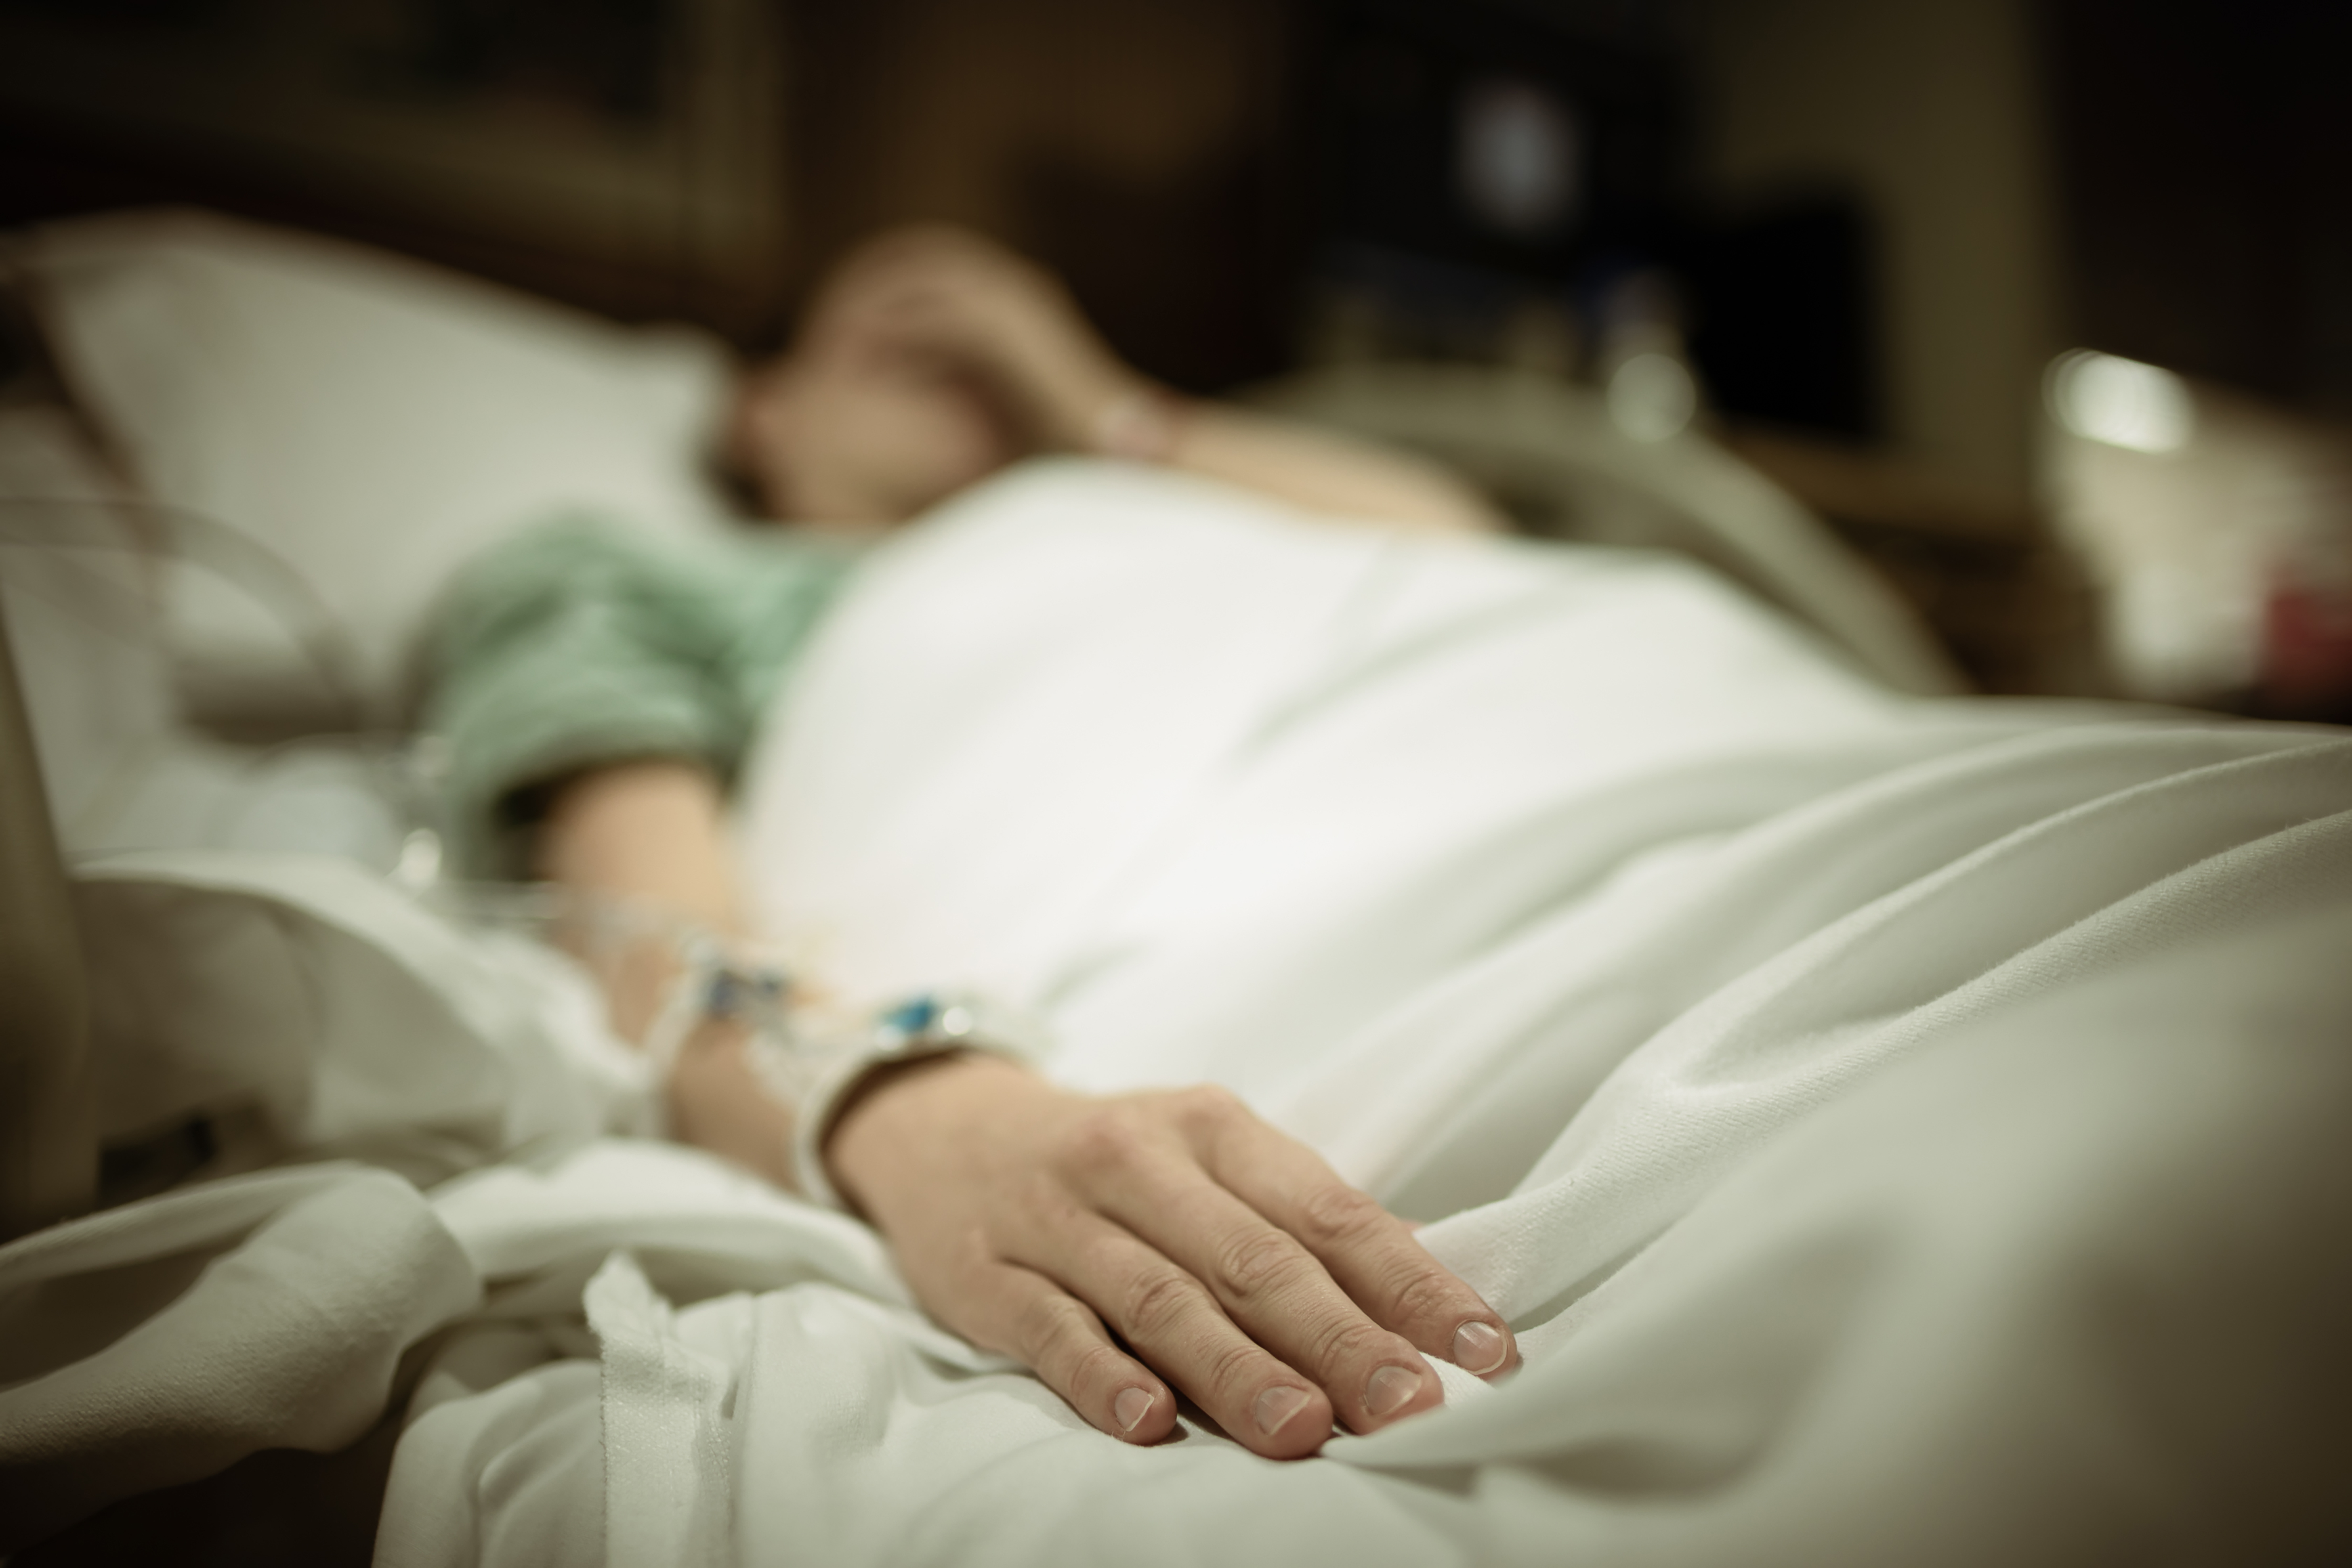 A woman looking sad in hospital | Source: Shutterstock